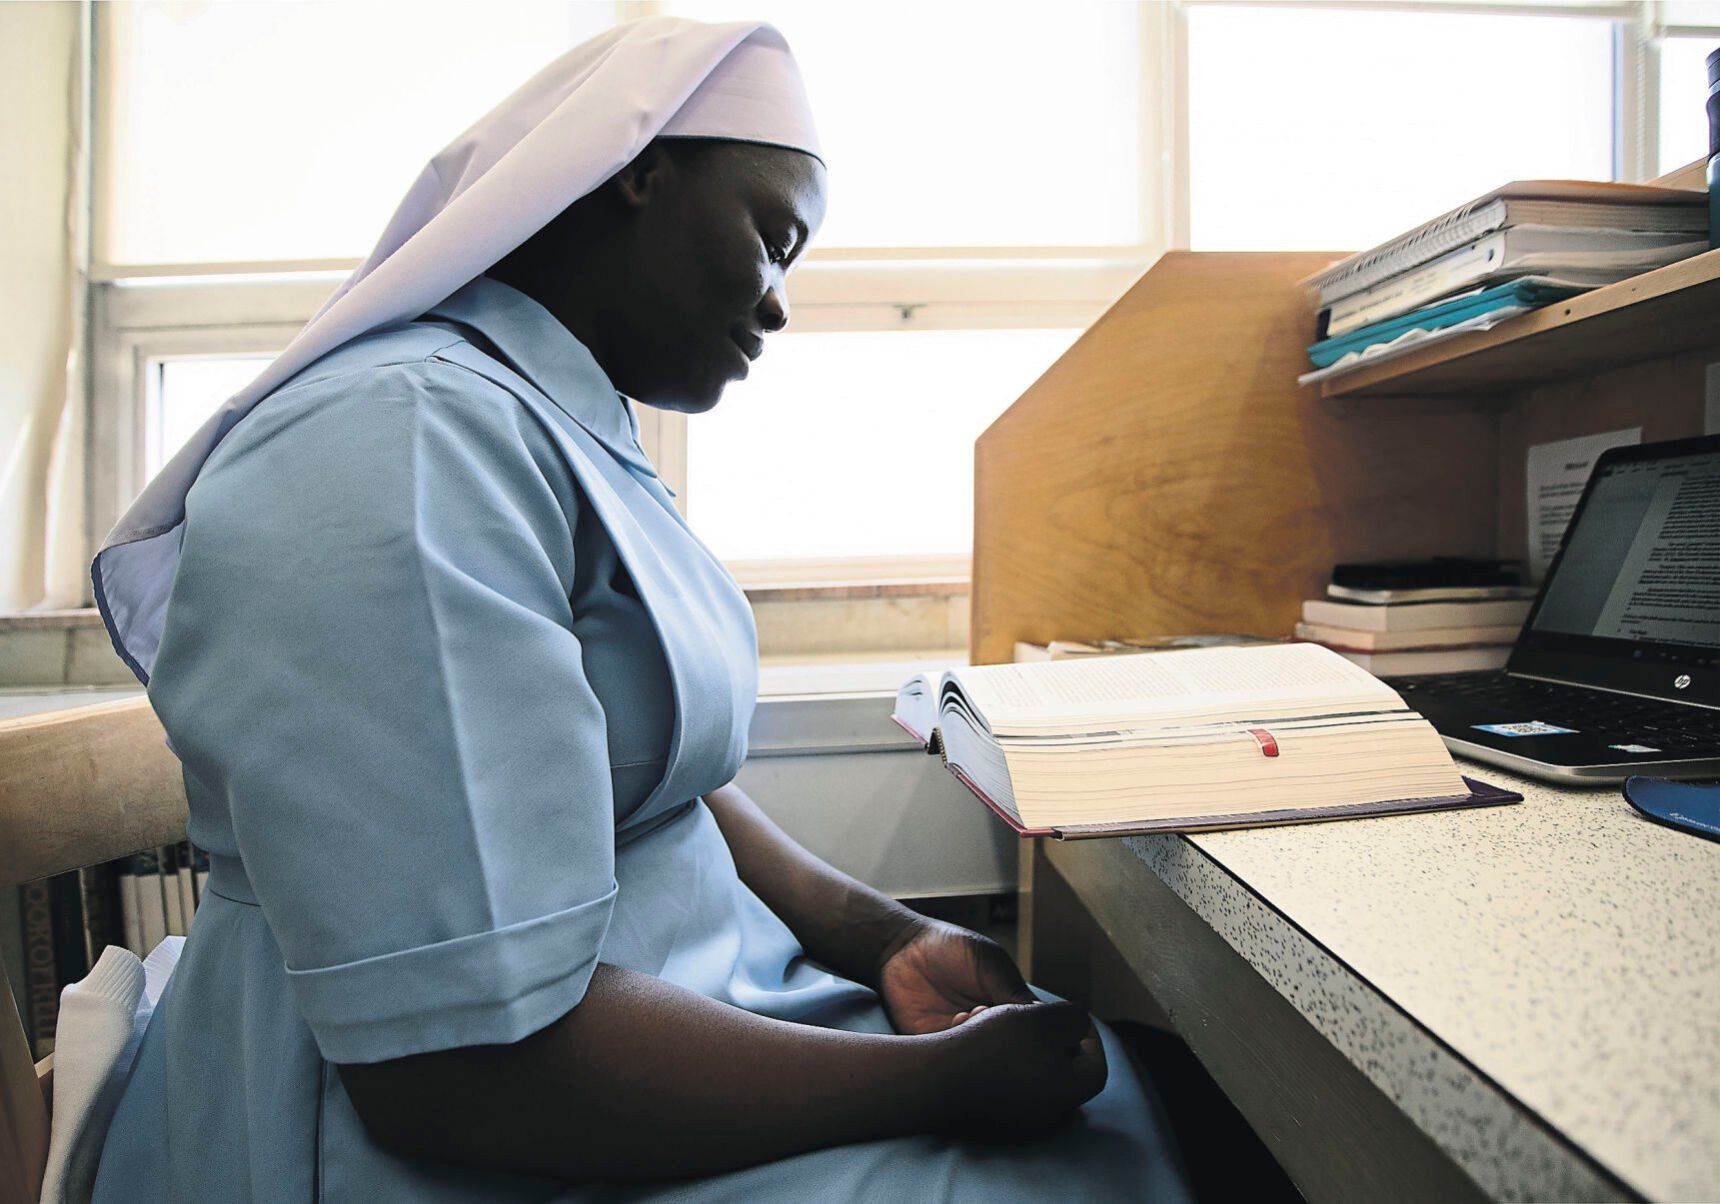 Sister Scovia Okello Apiyo, of Uganda, studies in the library.    PHOTO CREDIT: Stephen Gassman